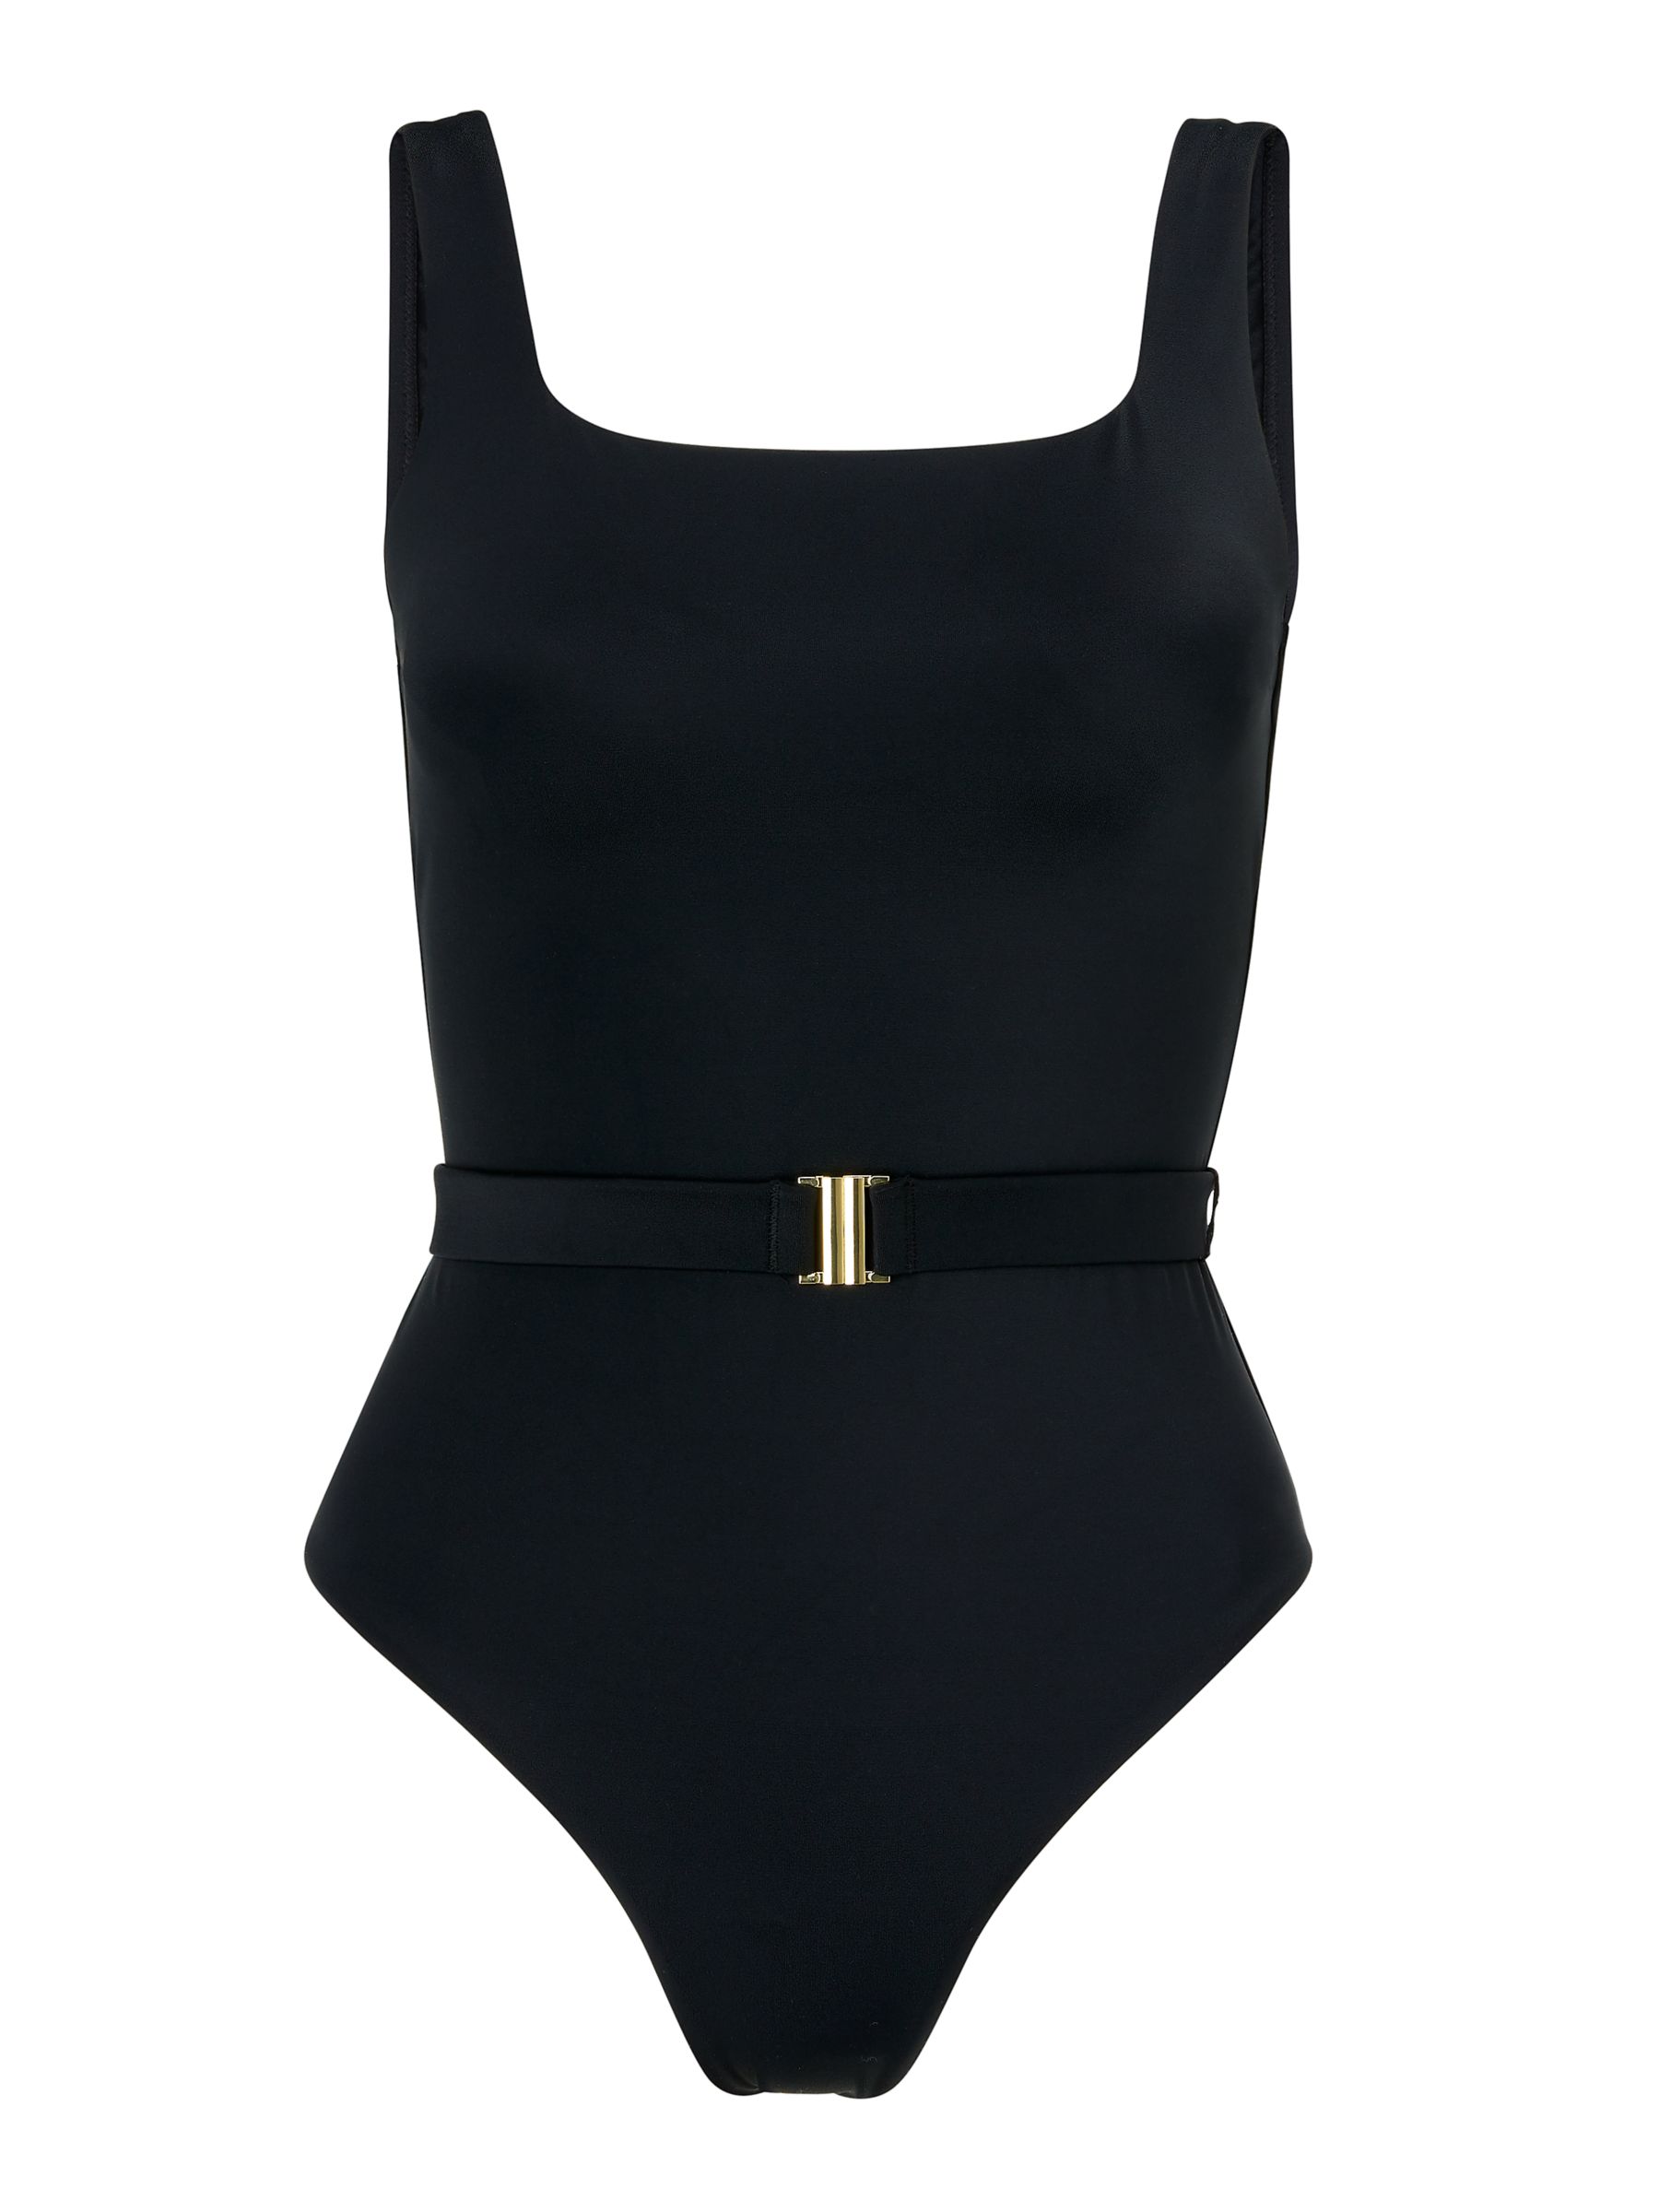 John Lewis & Partners Ava Belted Swimsuit, Black